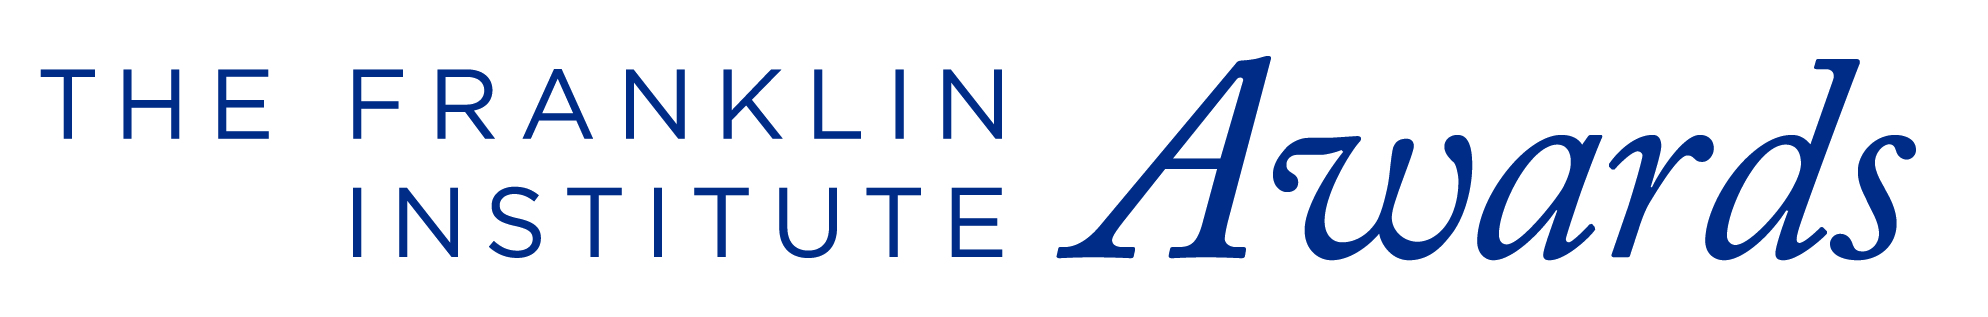 Franklin Institute Award logo